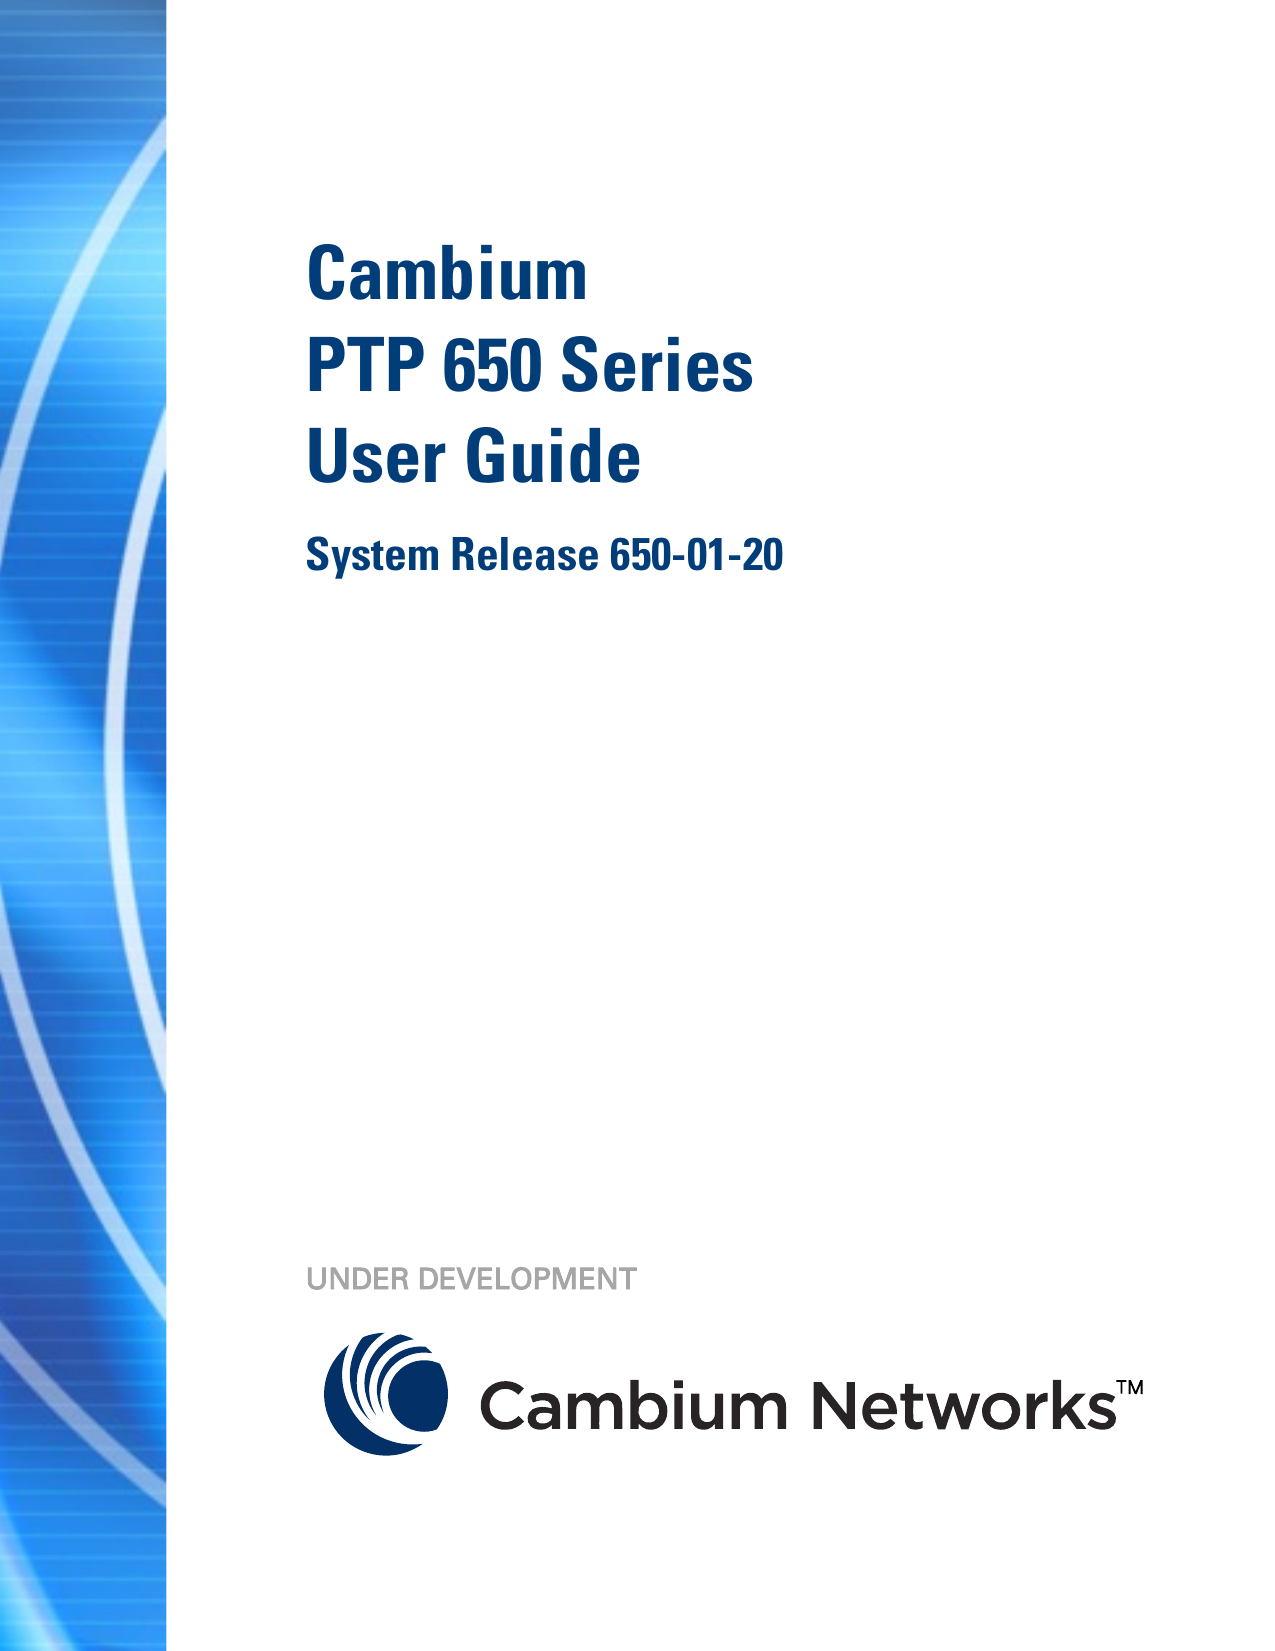 F  Cambium  PTP 650 Series  User Guide System Release 650-01-20                    UNDER DEVELOPMENT   